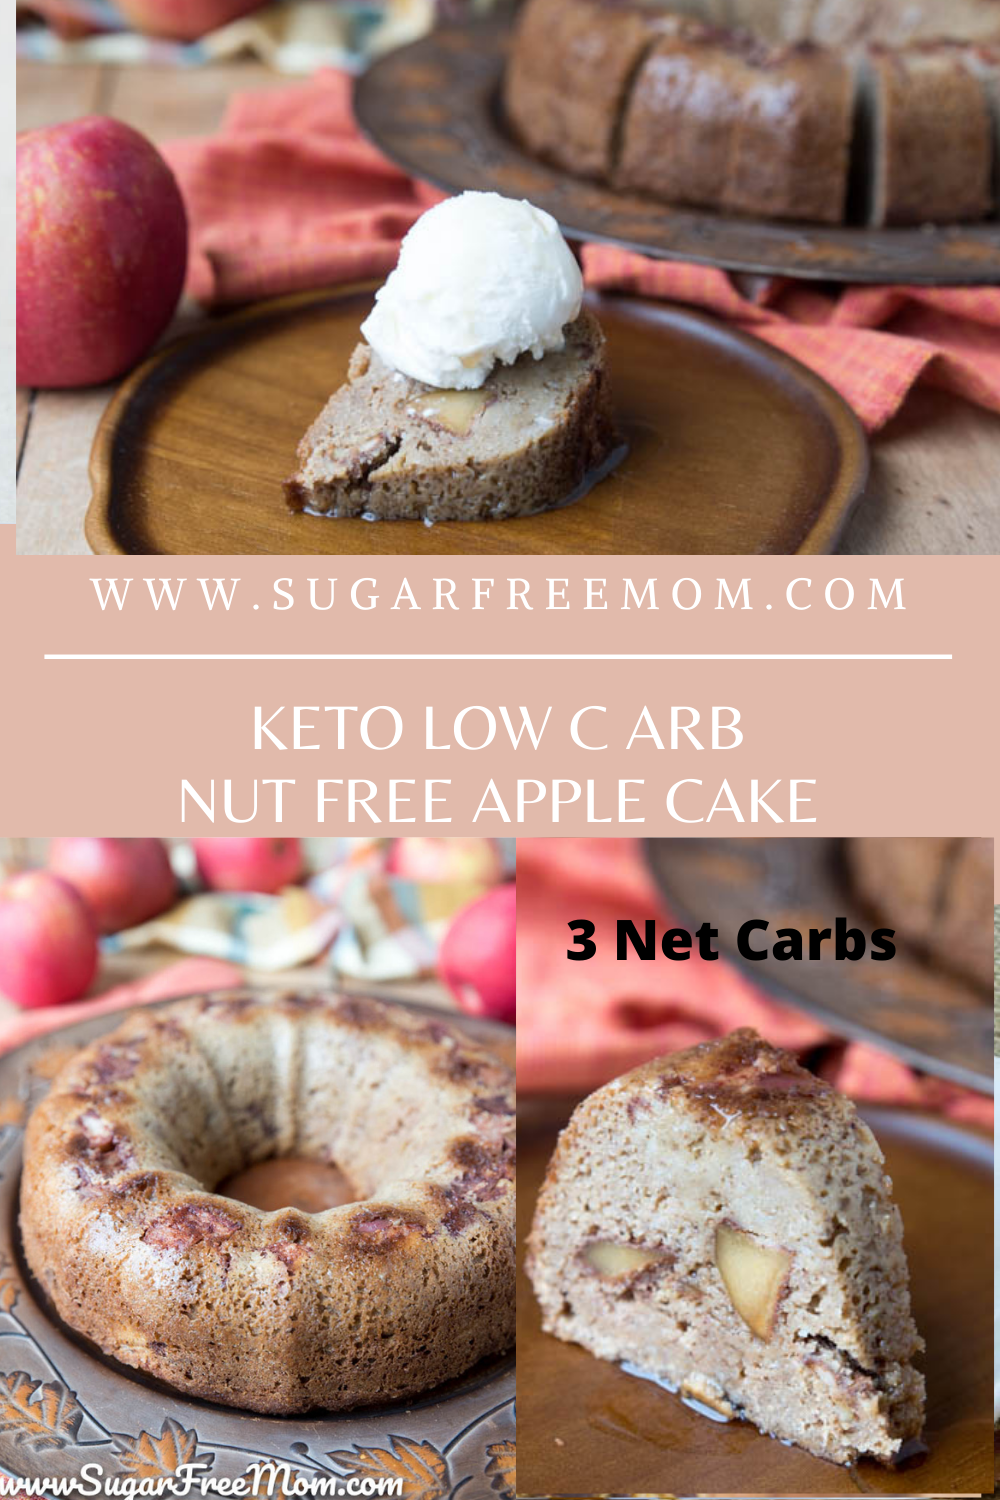 Keto Apple Cake (Nut Free, Gluten Free, Low Carb)